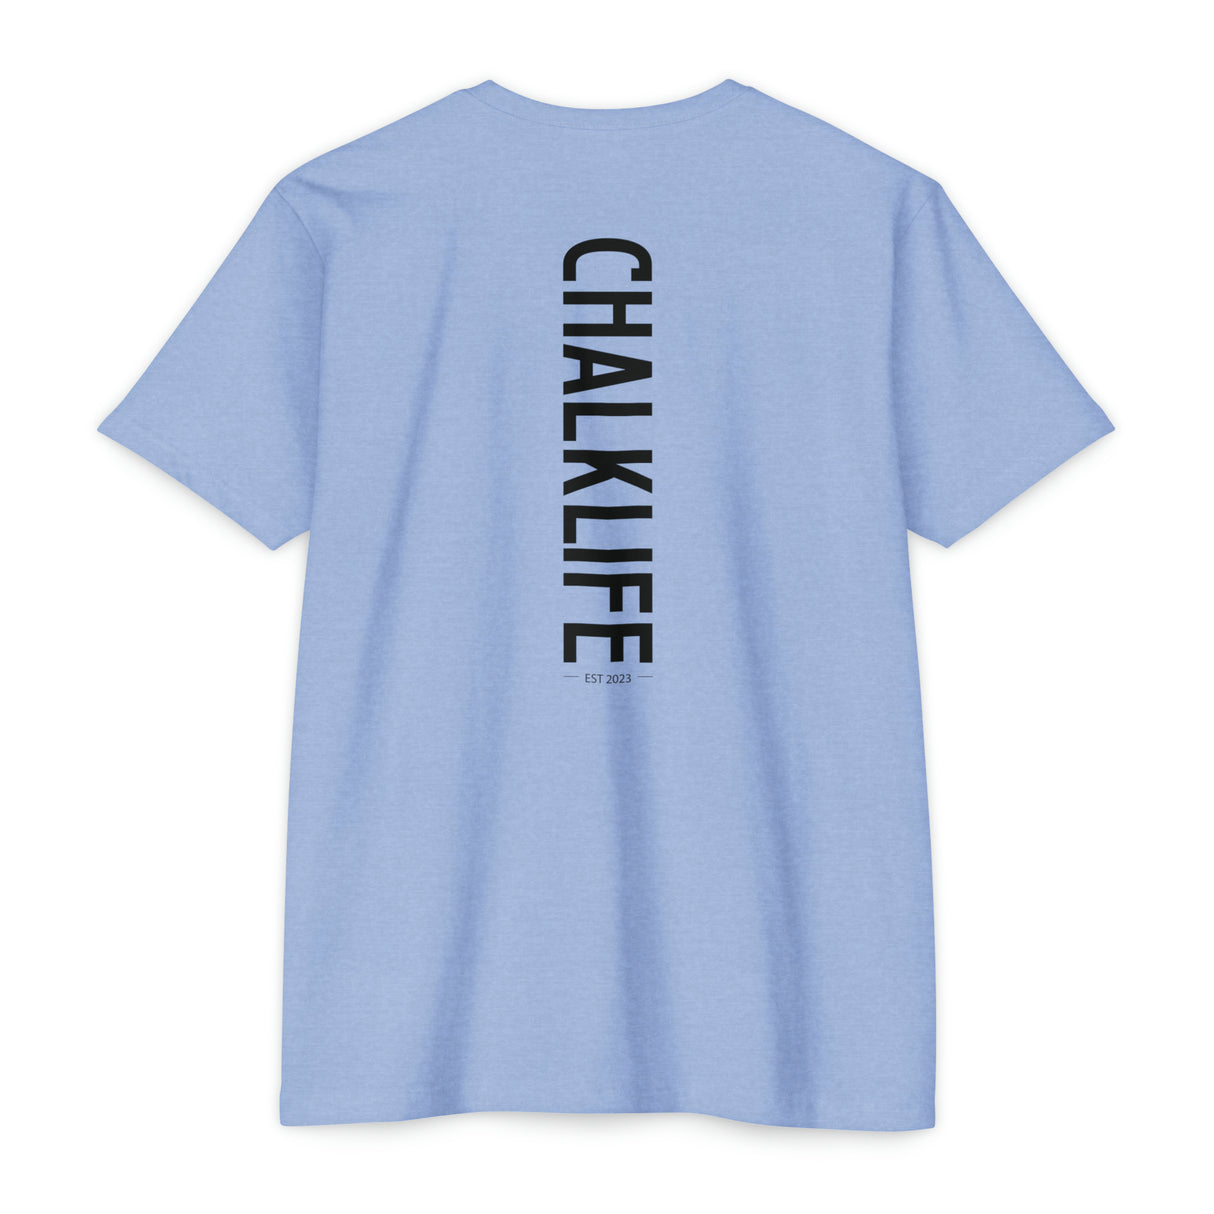 Chalklife "Stick It" Regular T-Shirt - Chalklife, LLC